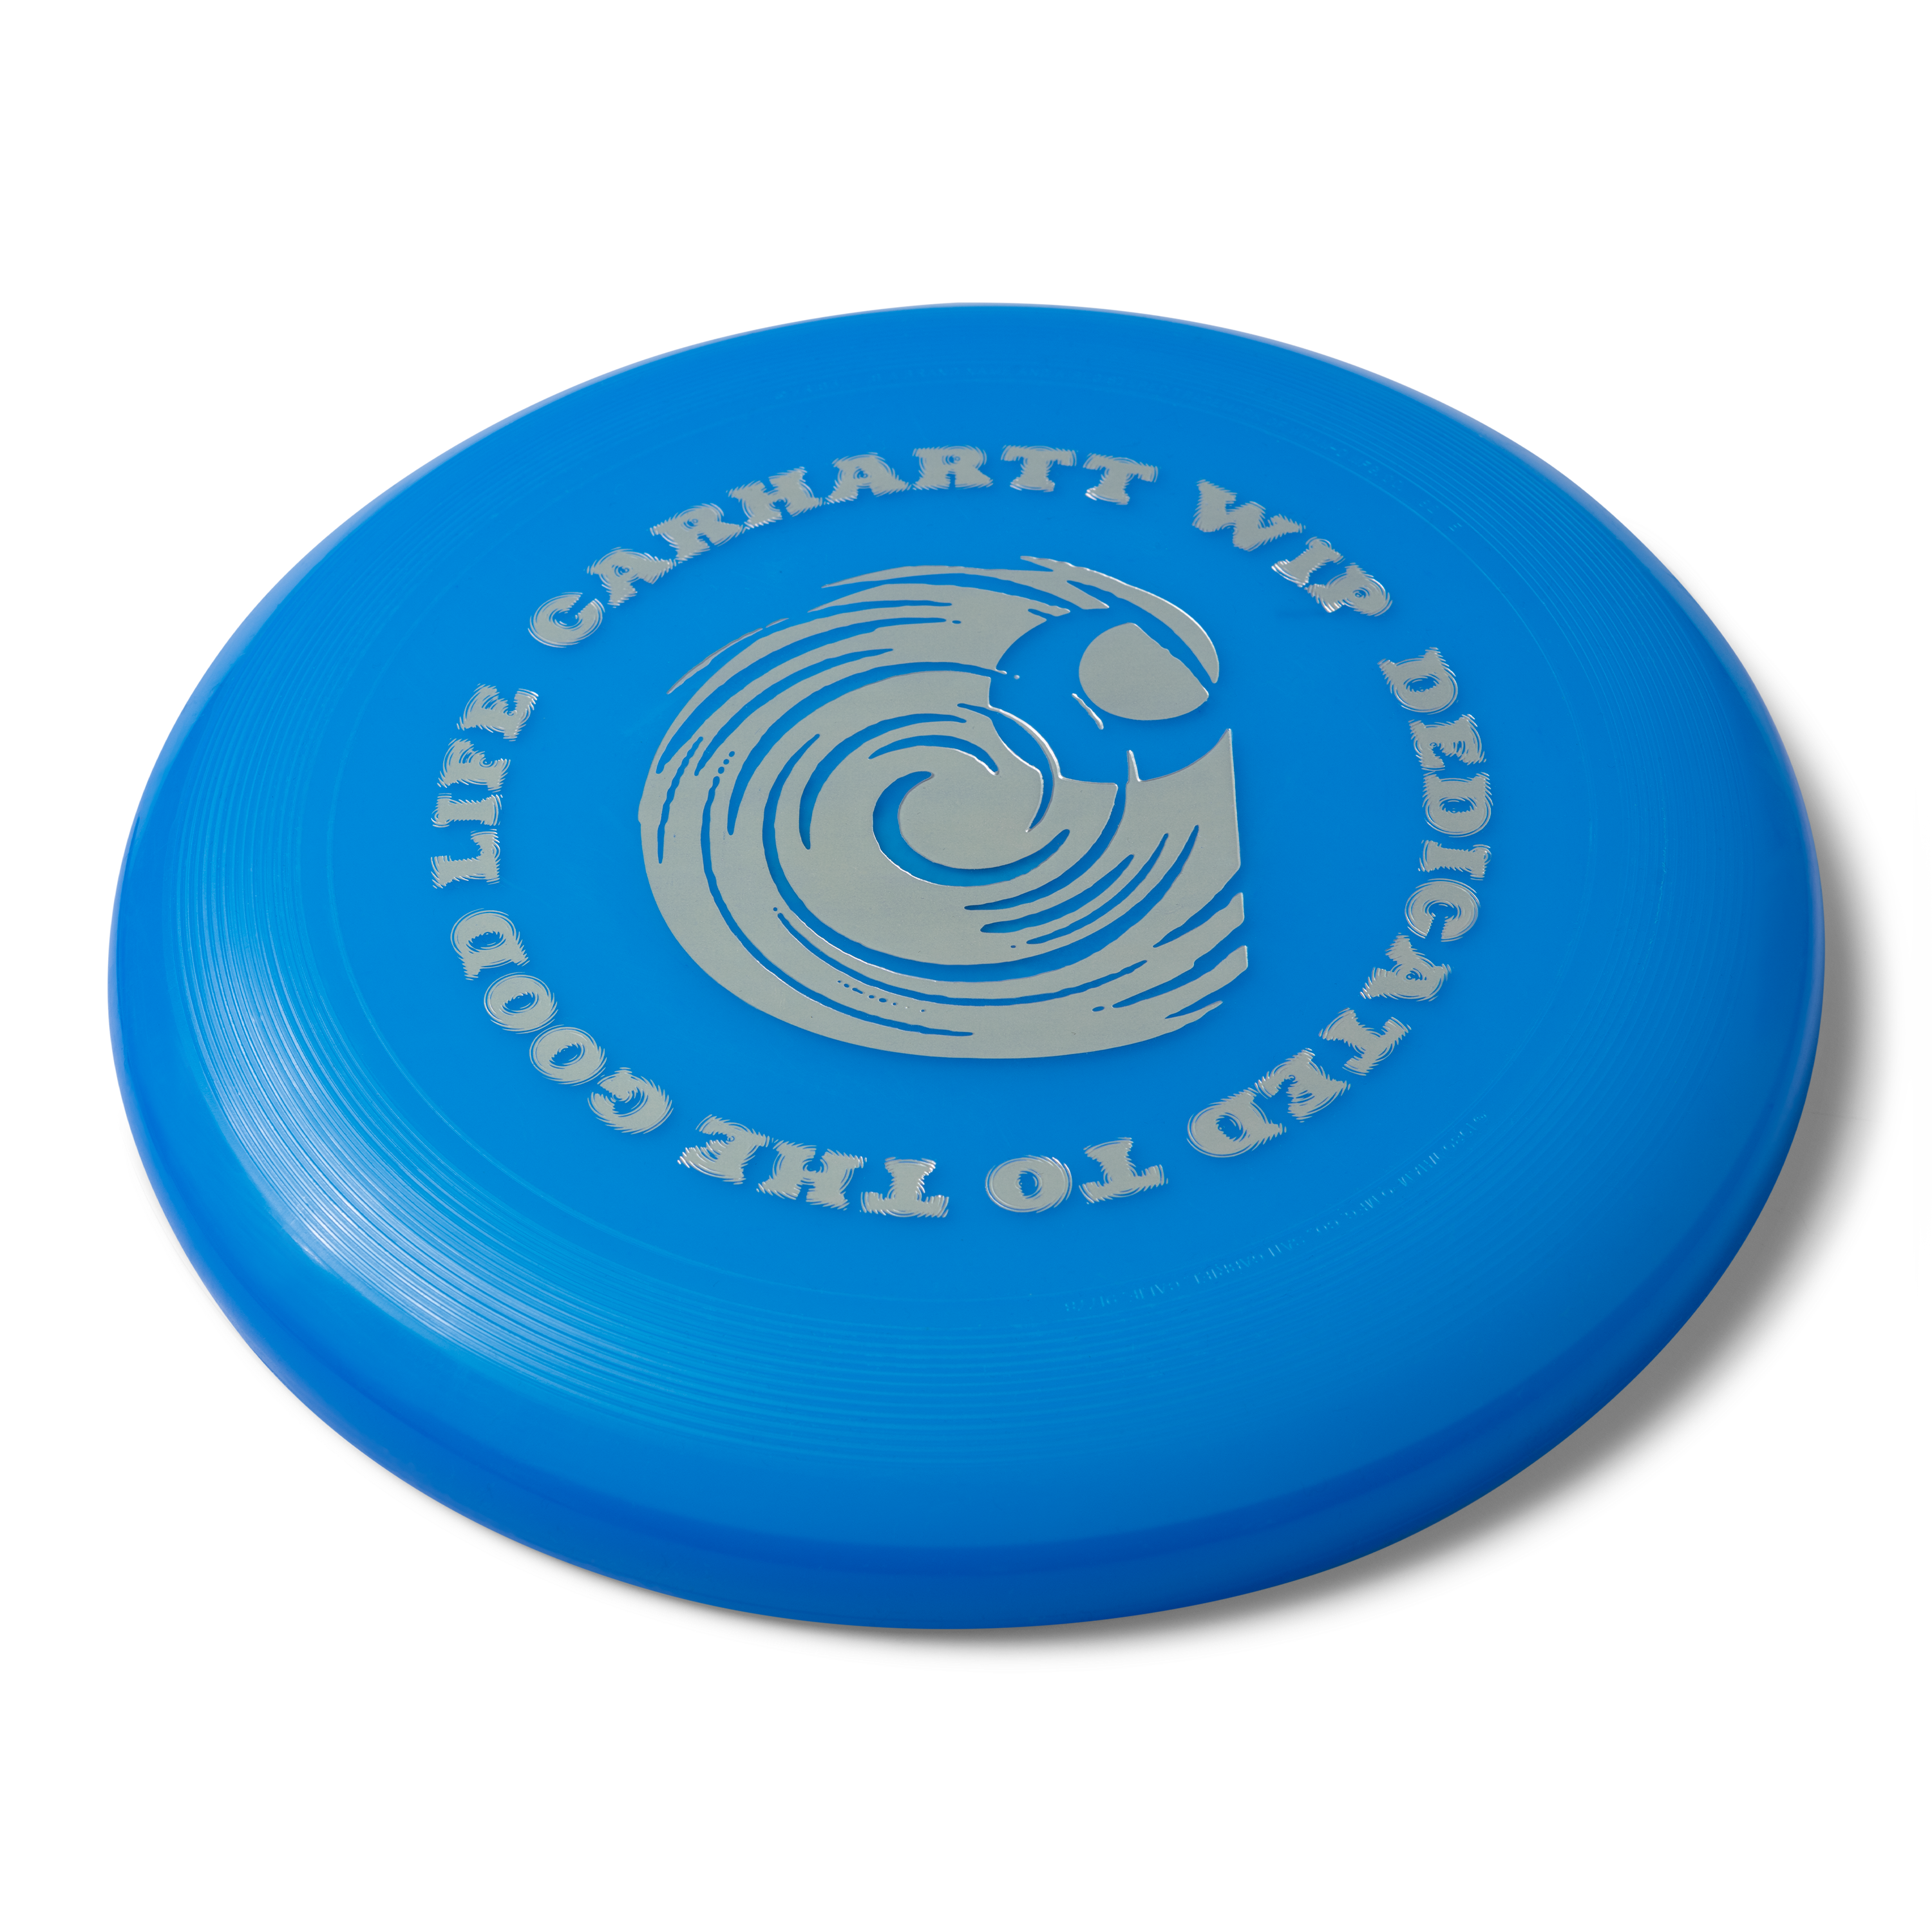 Carhartt WIP Mist Frisbee in Blau